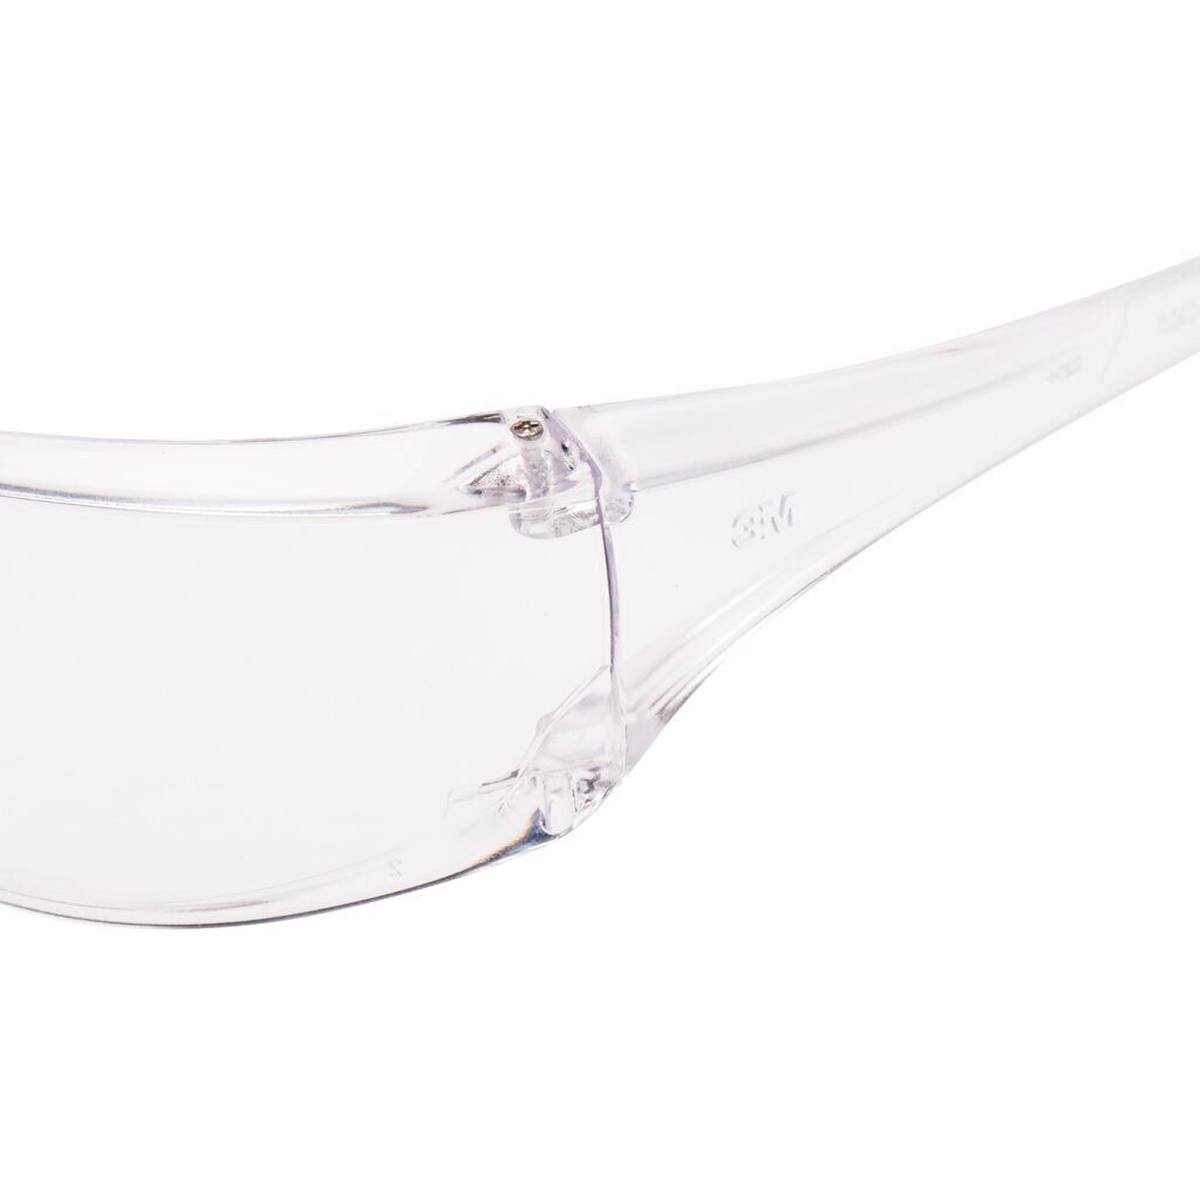 occhiali di sicurezza 3M Virtua AF, rivestimento antigraffio/antiappannamento, lenti chiare, 715001AF-BULK